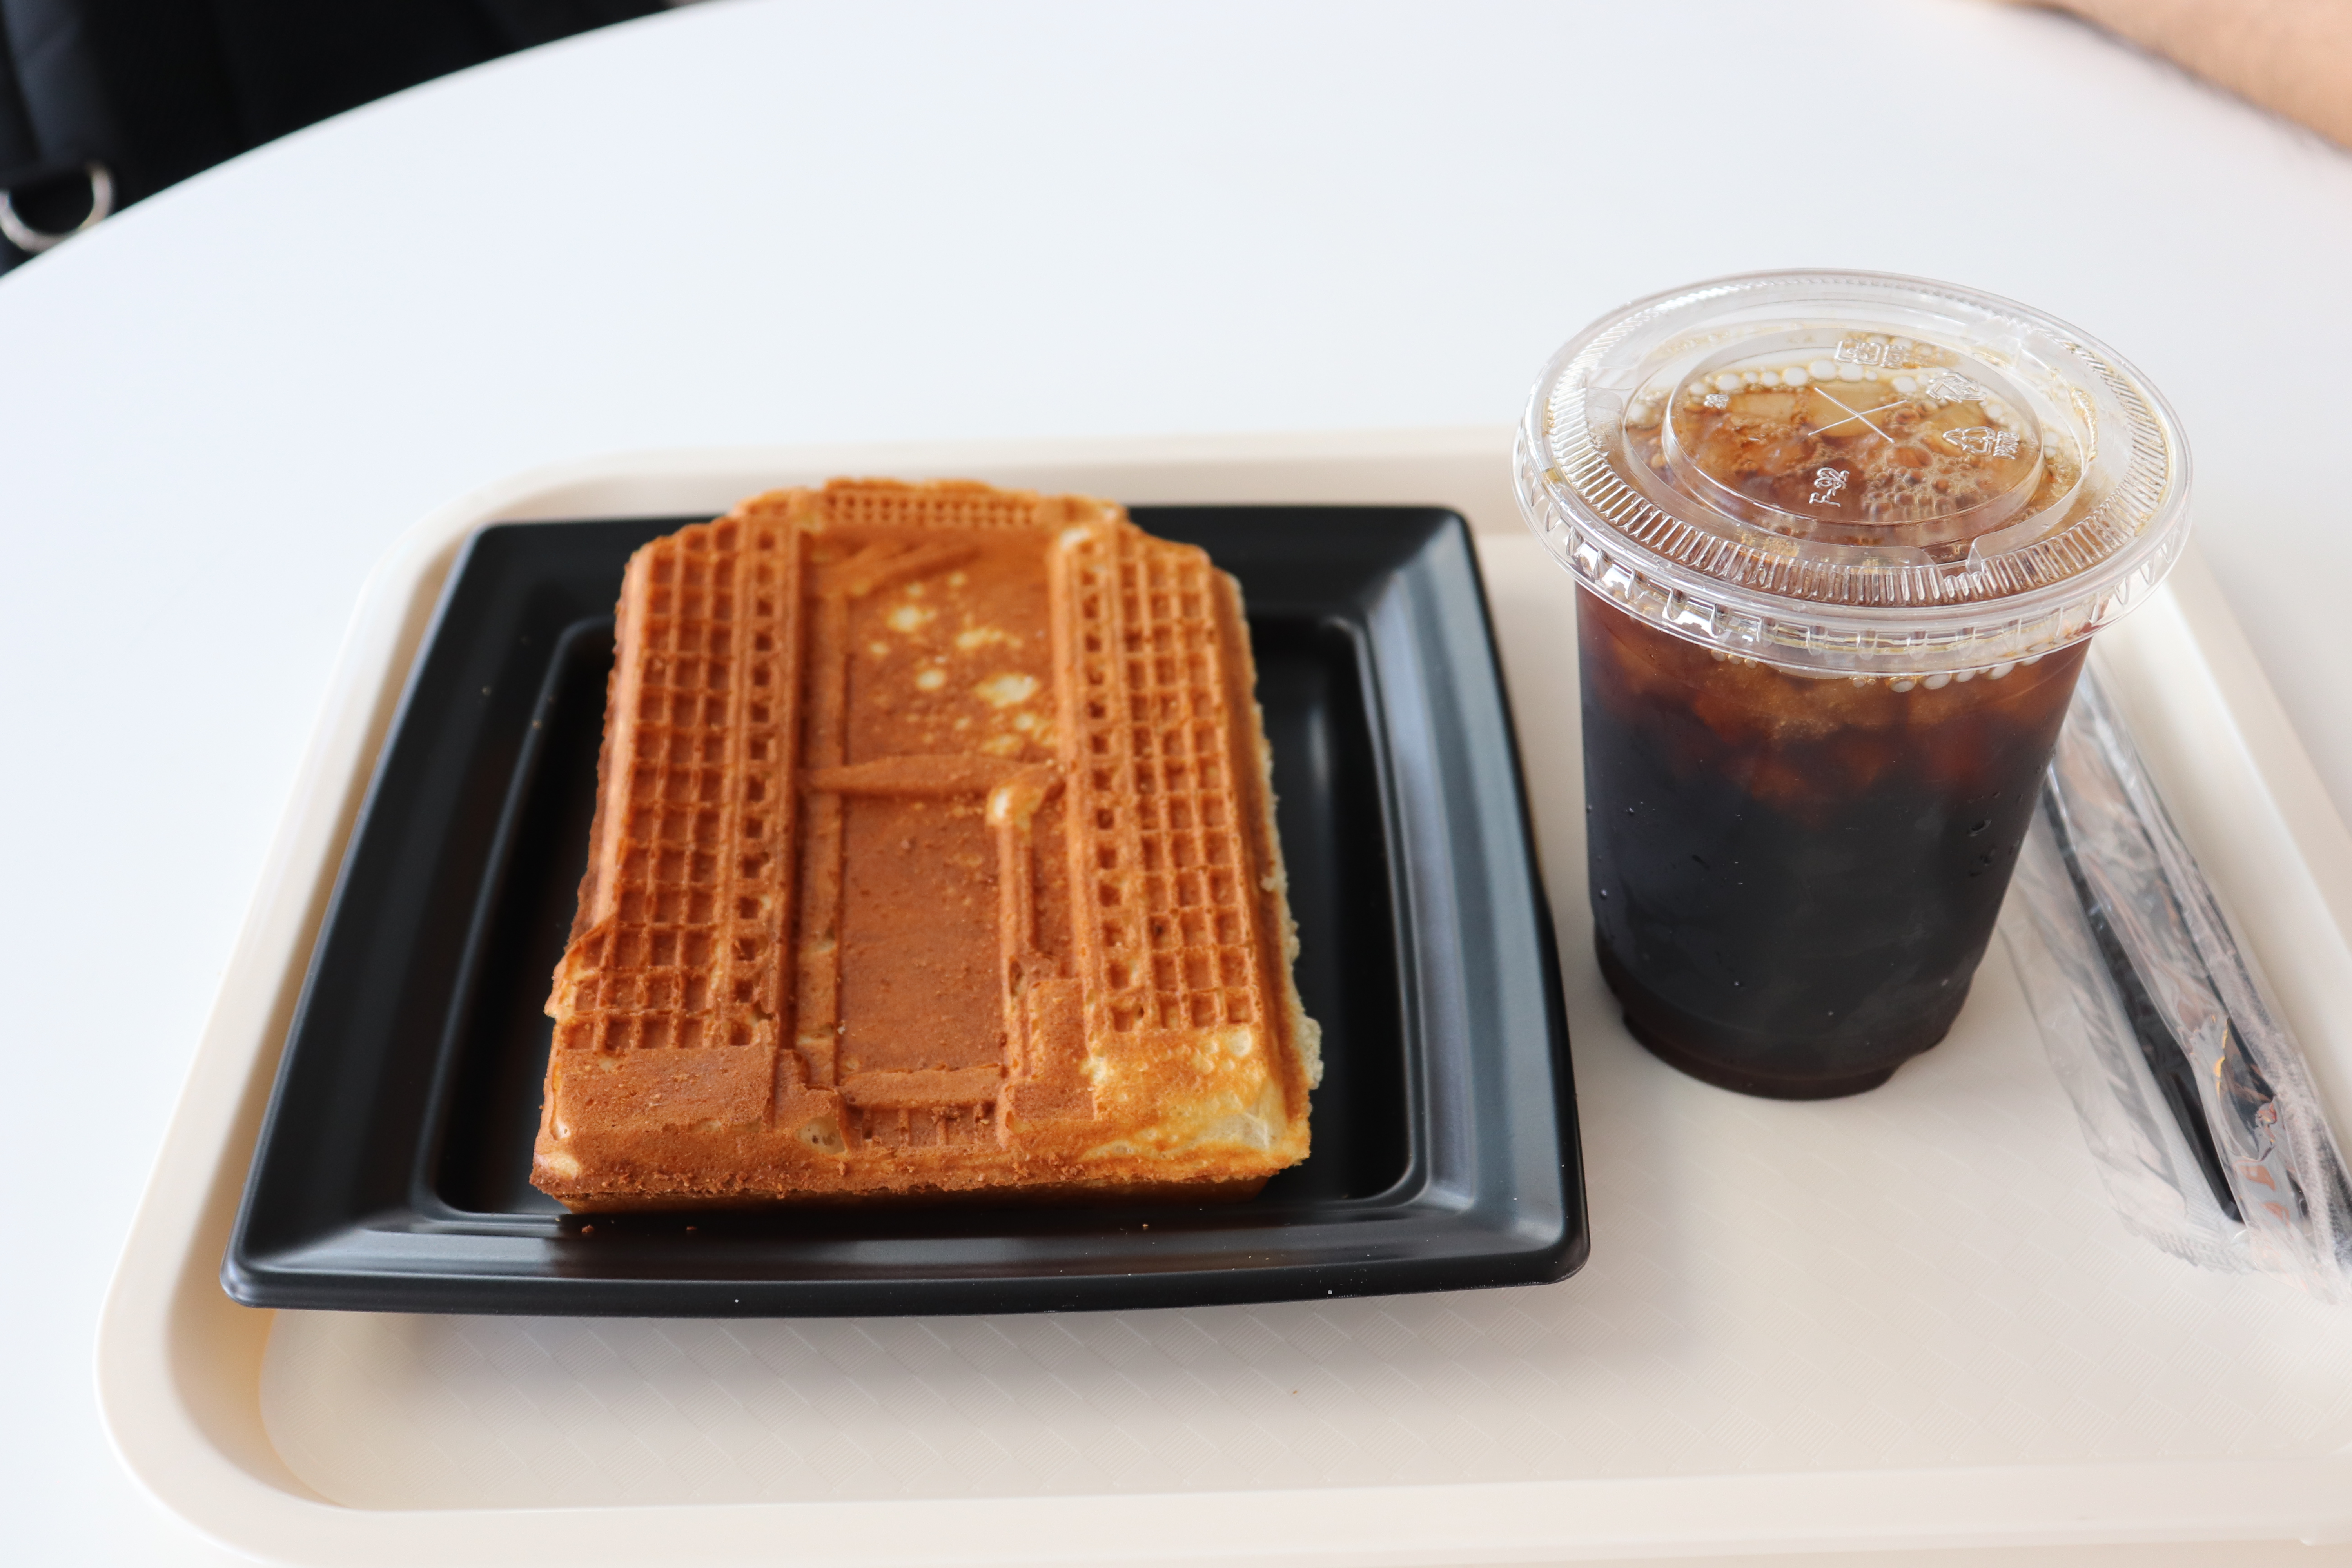 umeda sky building shaped waffle from cafe sky